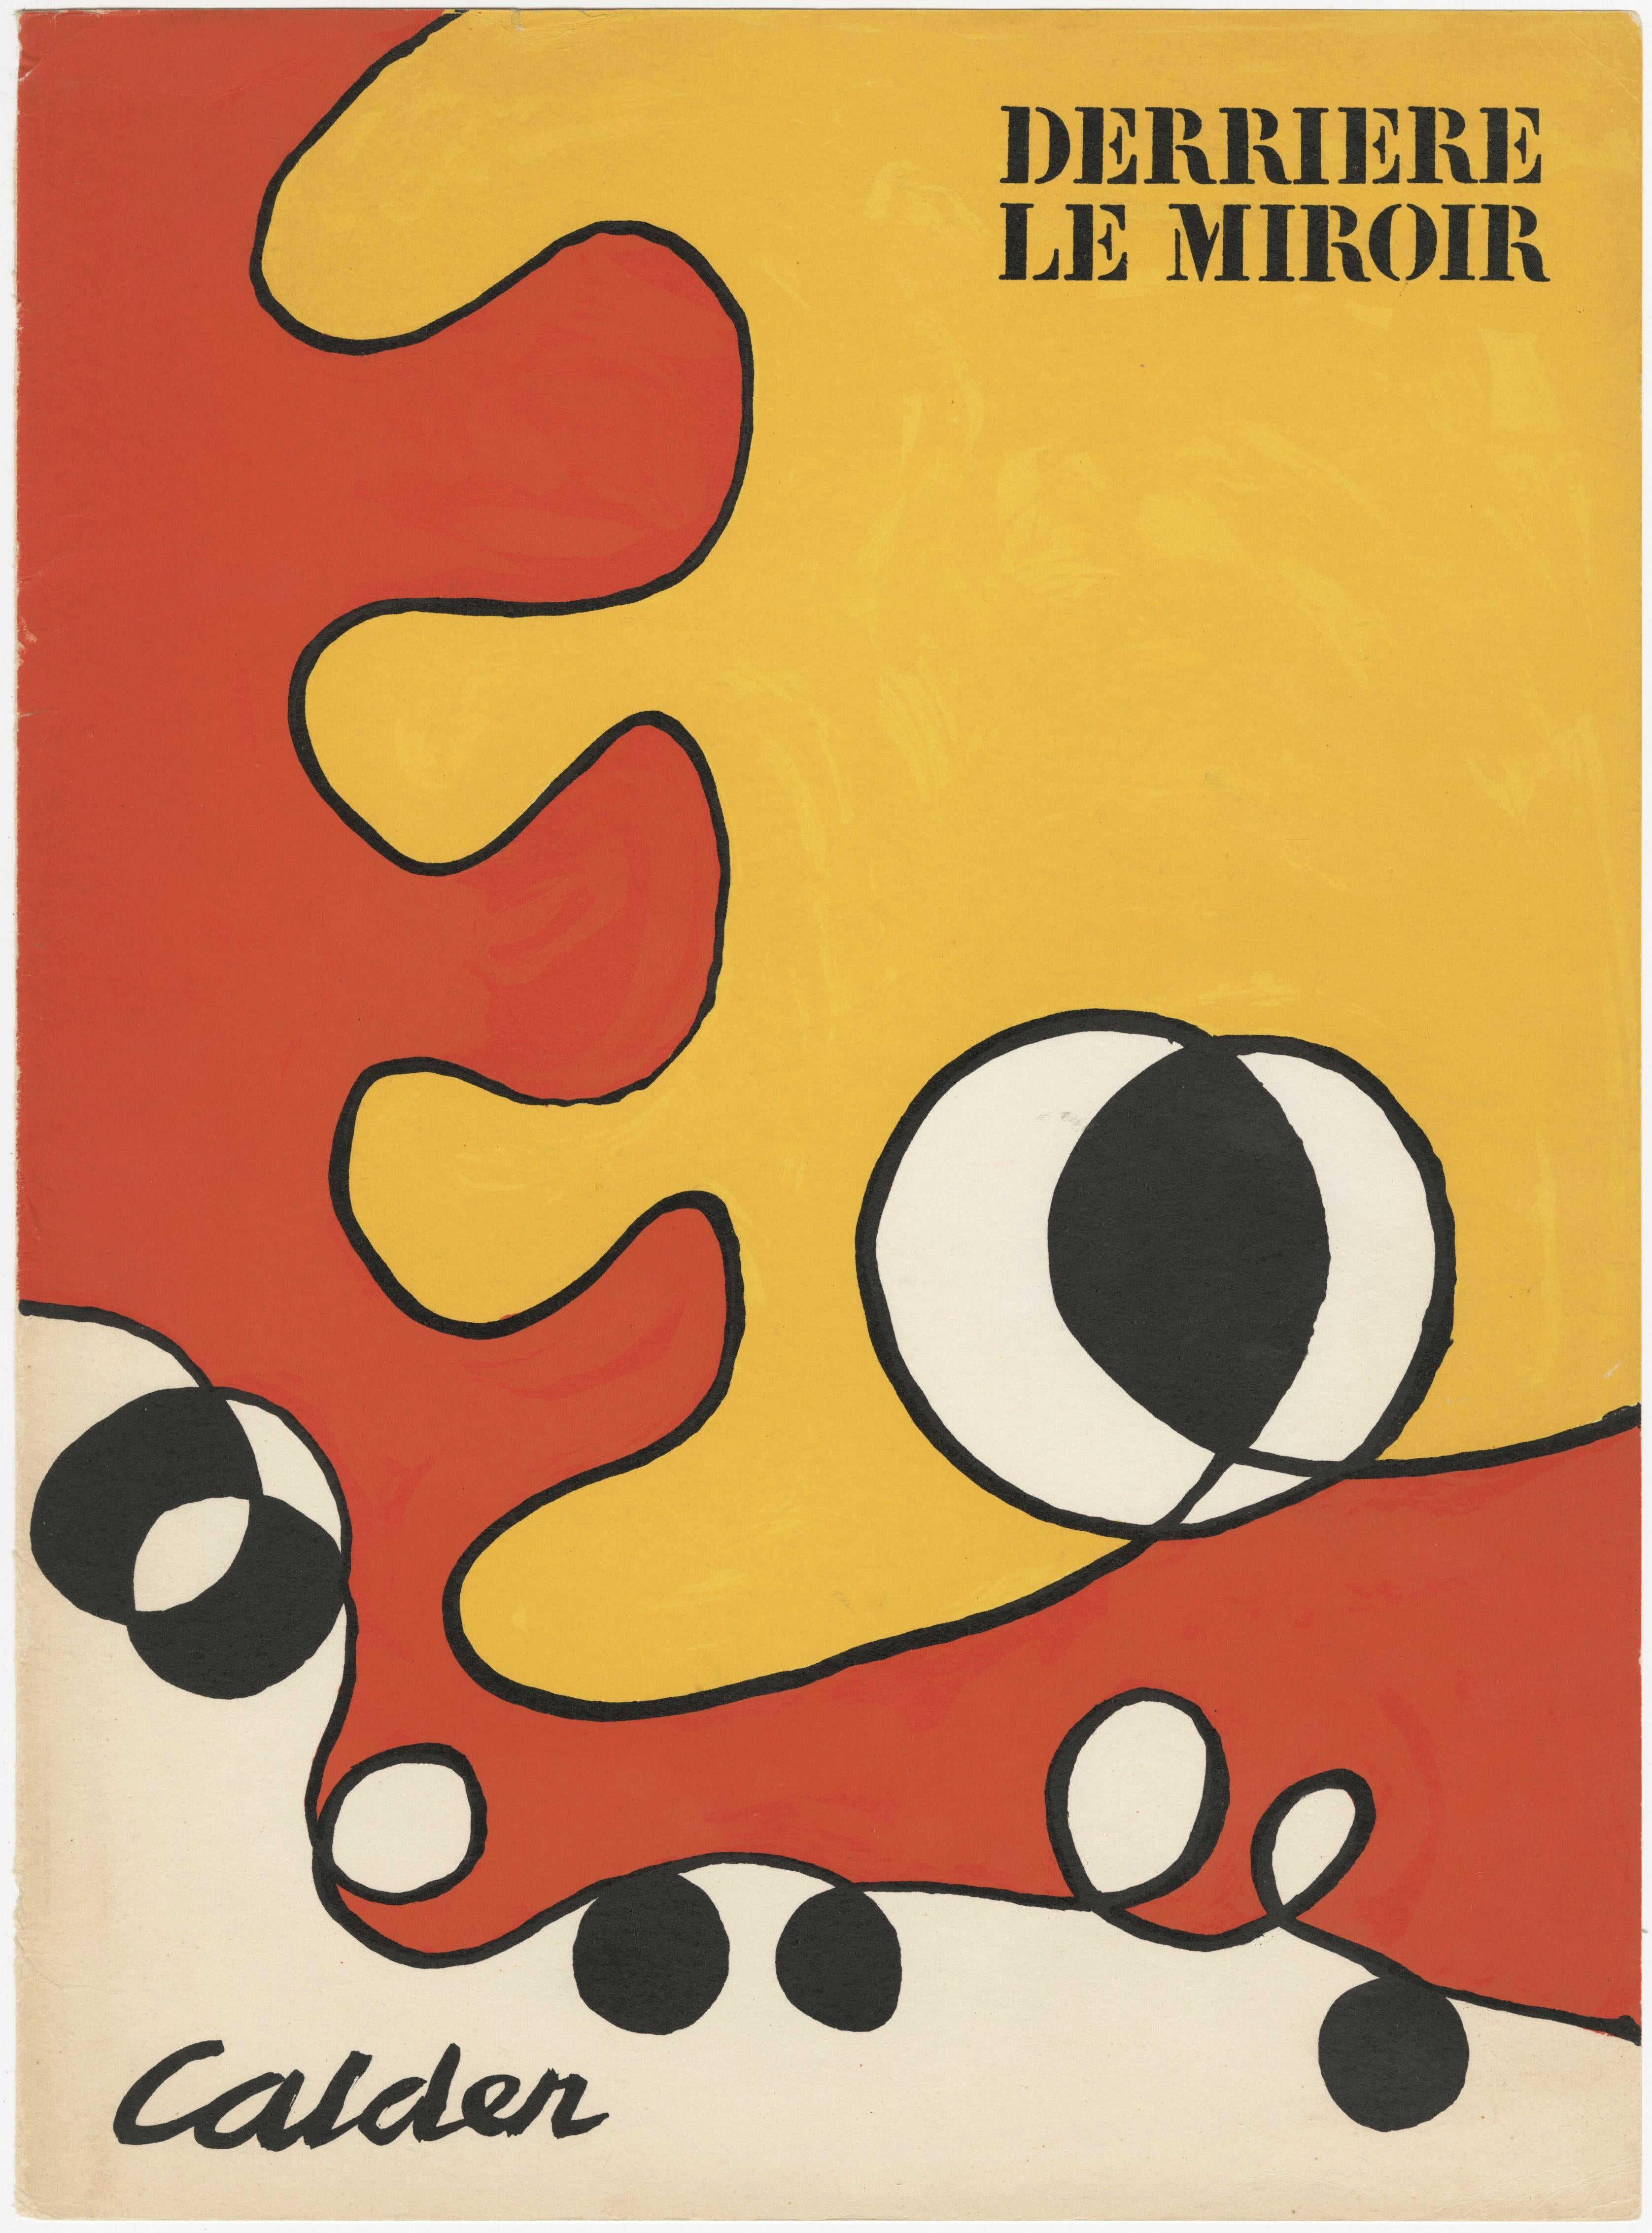 Alexander Calder Abstract Print - Cover for DLM No. 173